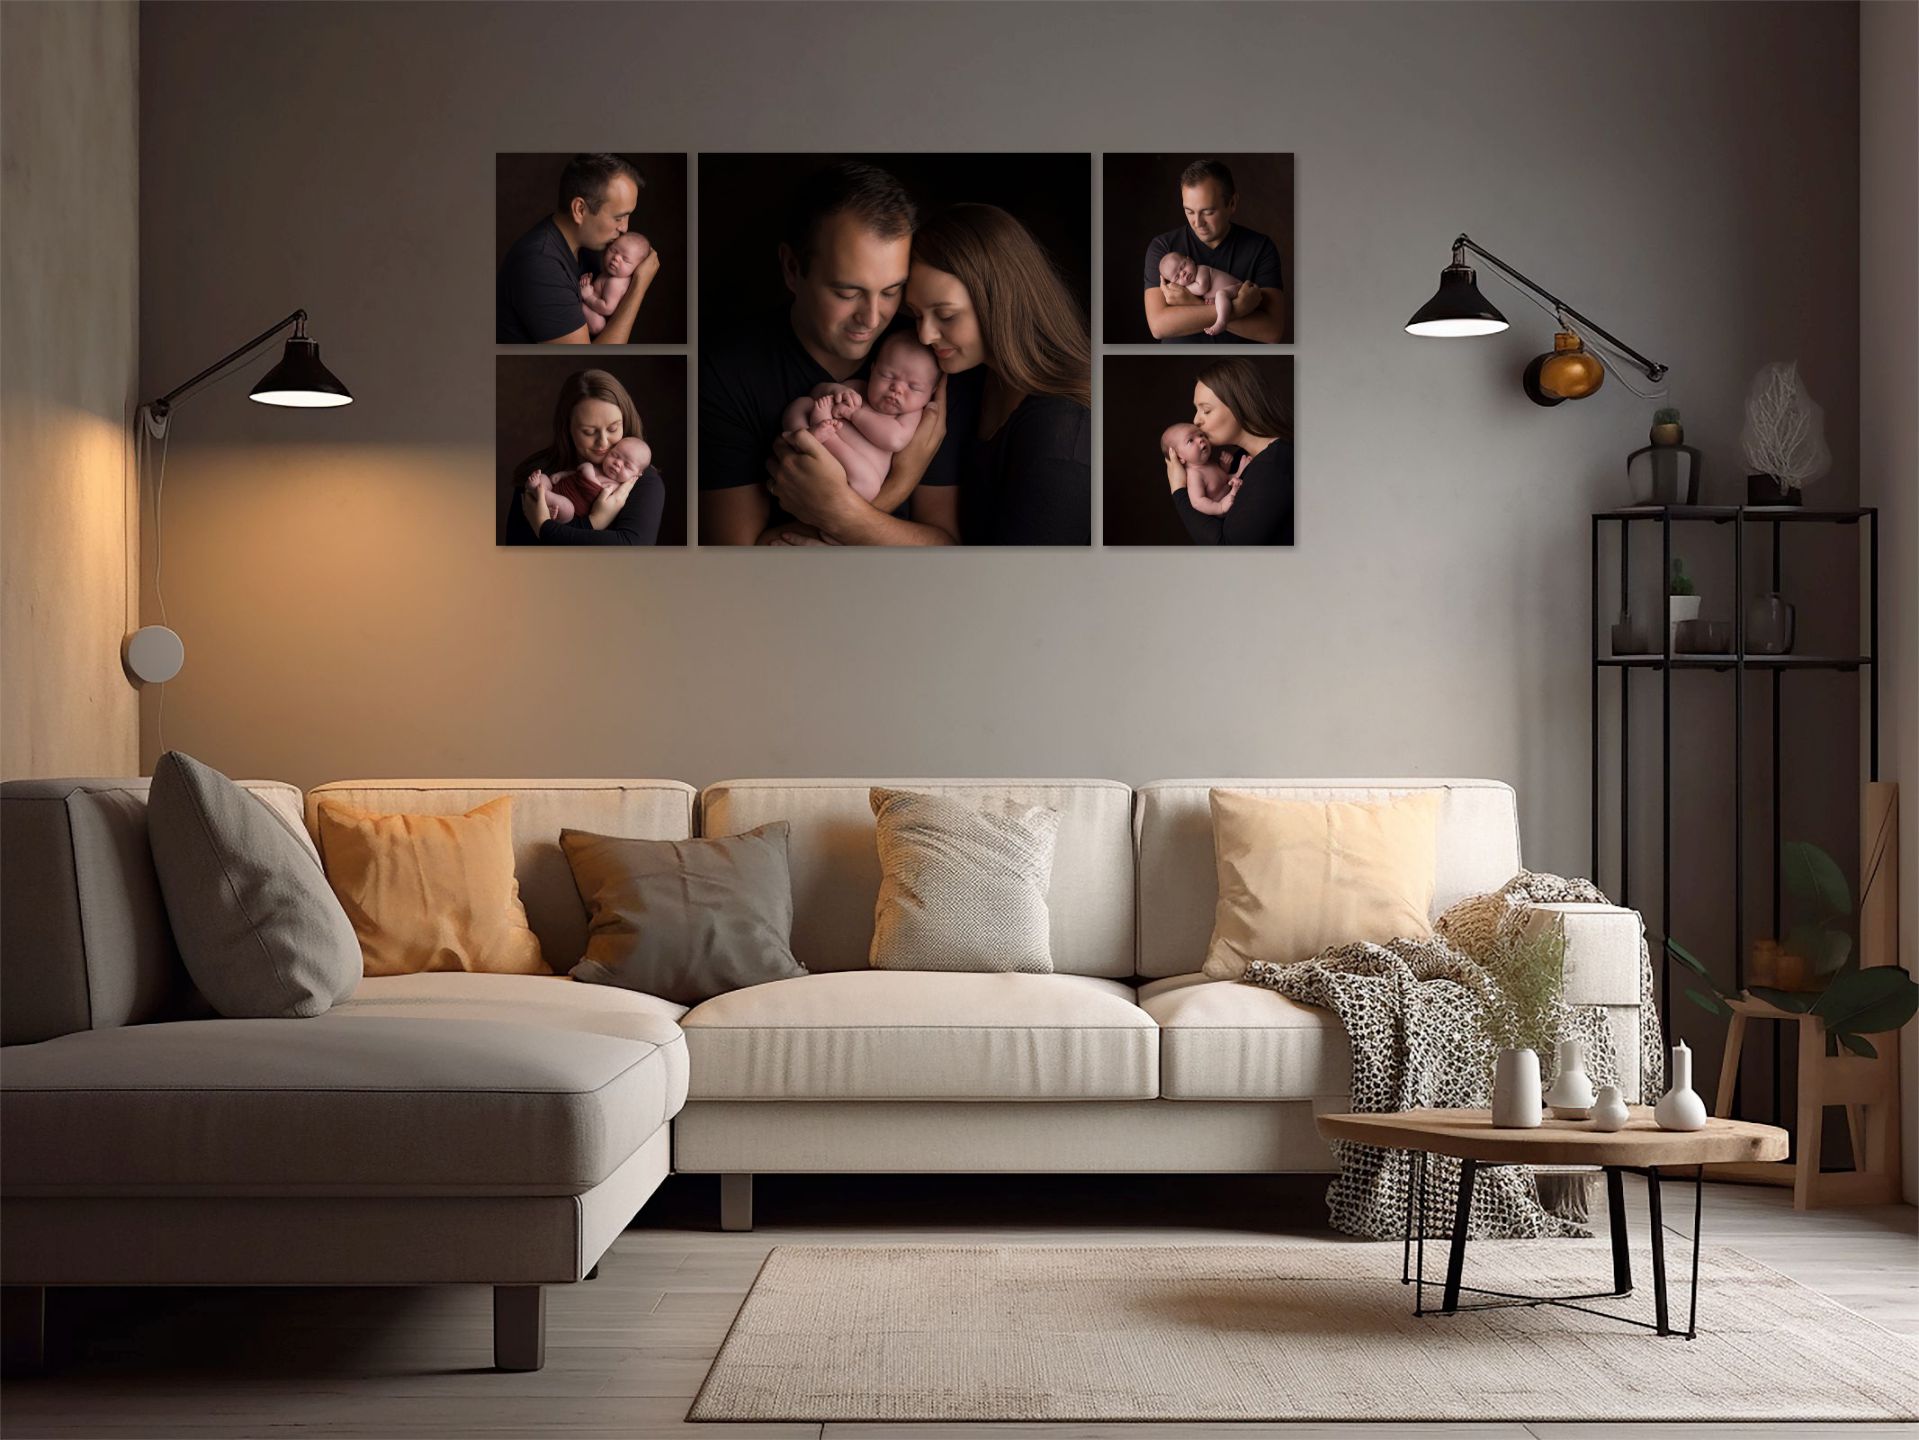 A-Fotografy studio wall portrait designs